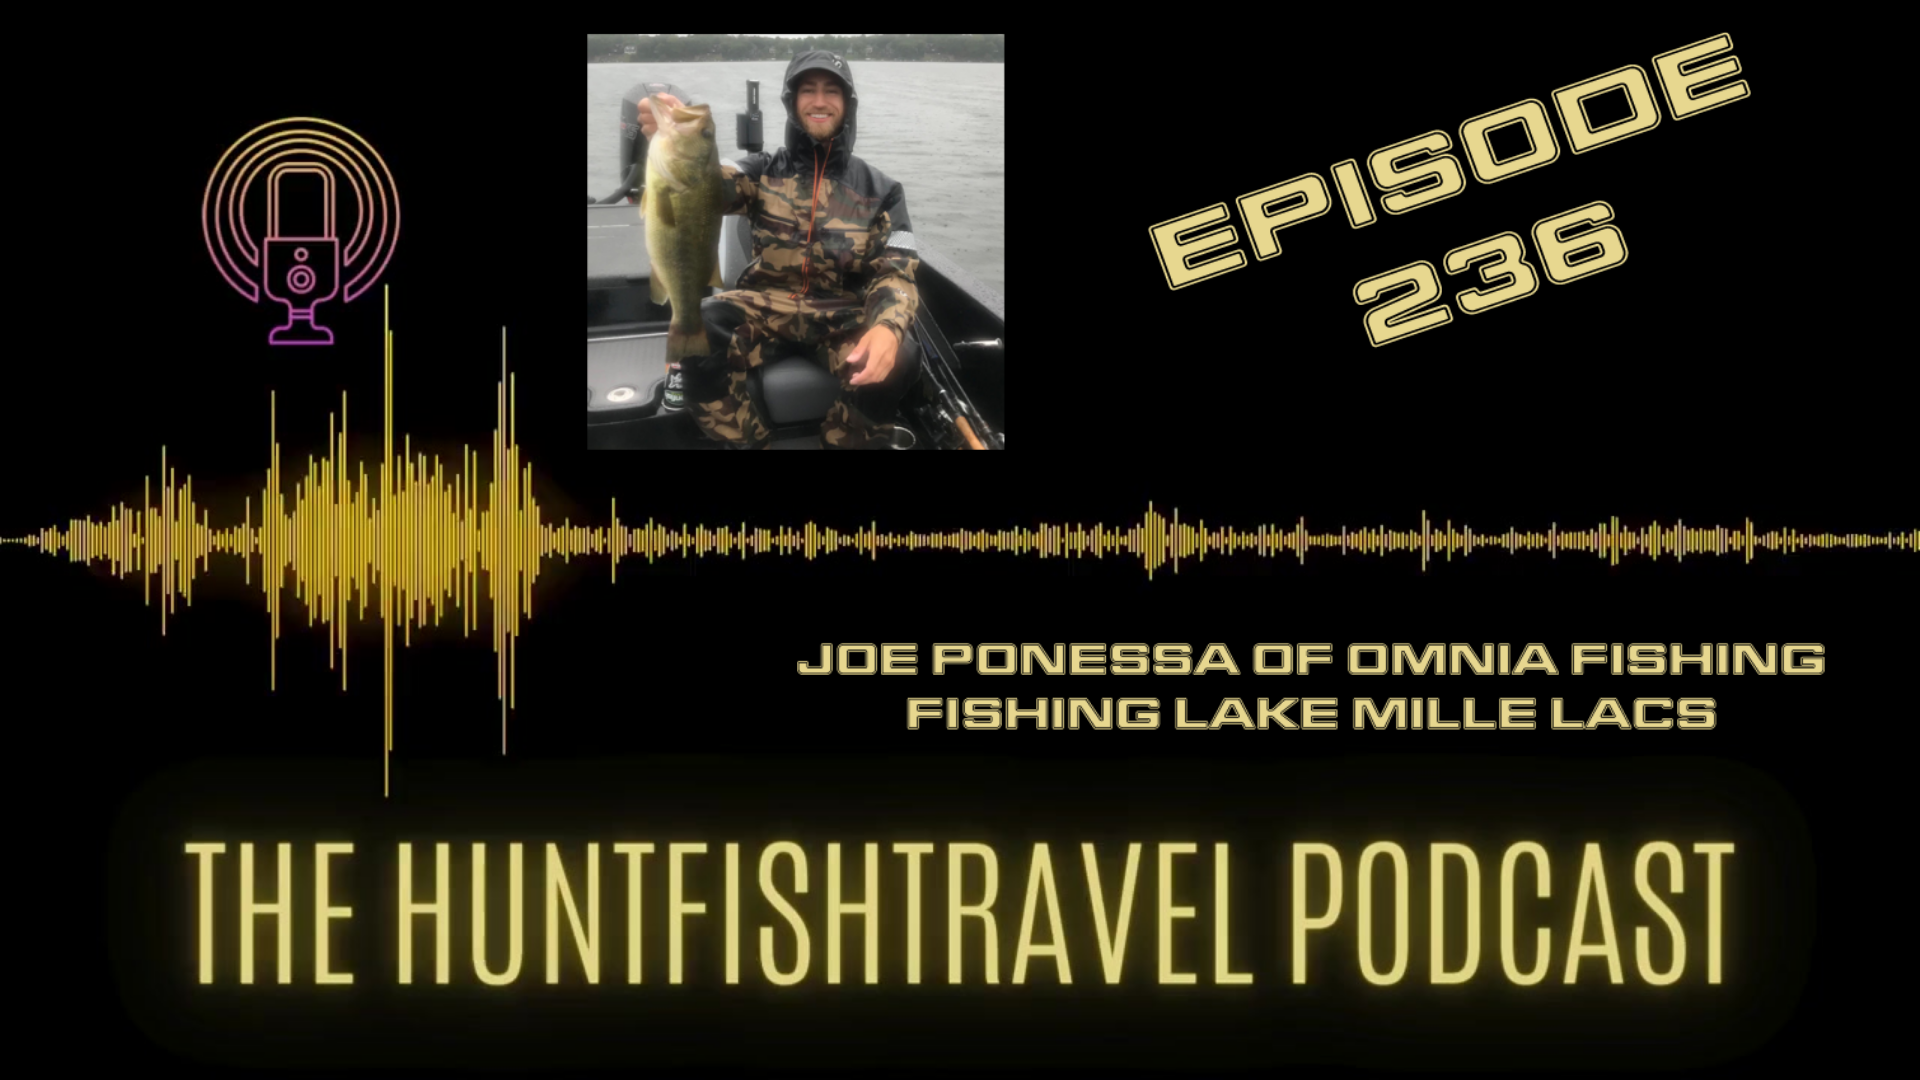 #HuntFishTravel Ep236 – Fishing Lake Mille Lacs with Joe Ponessa from Omnia Fishing